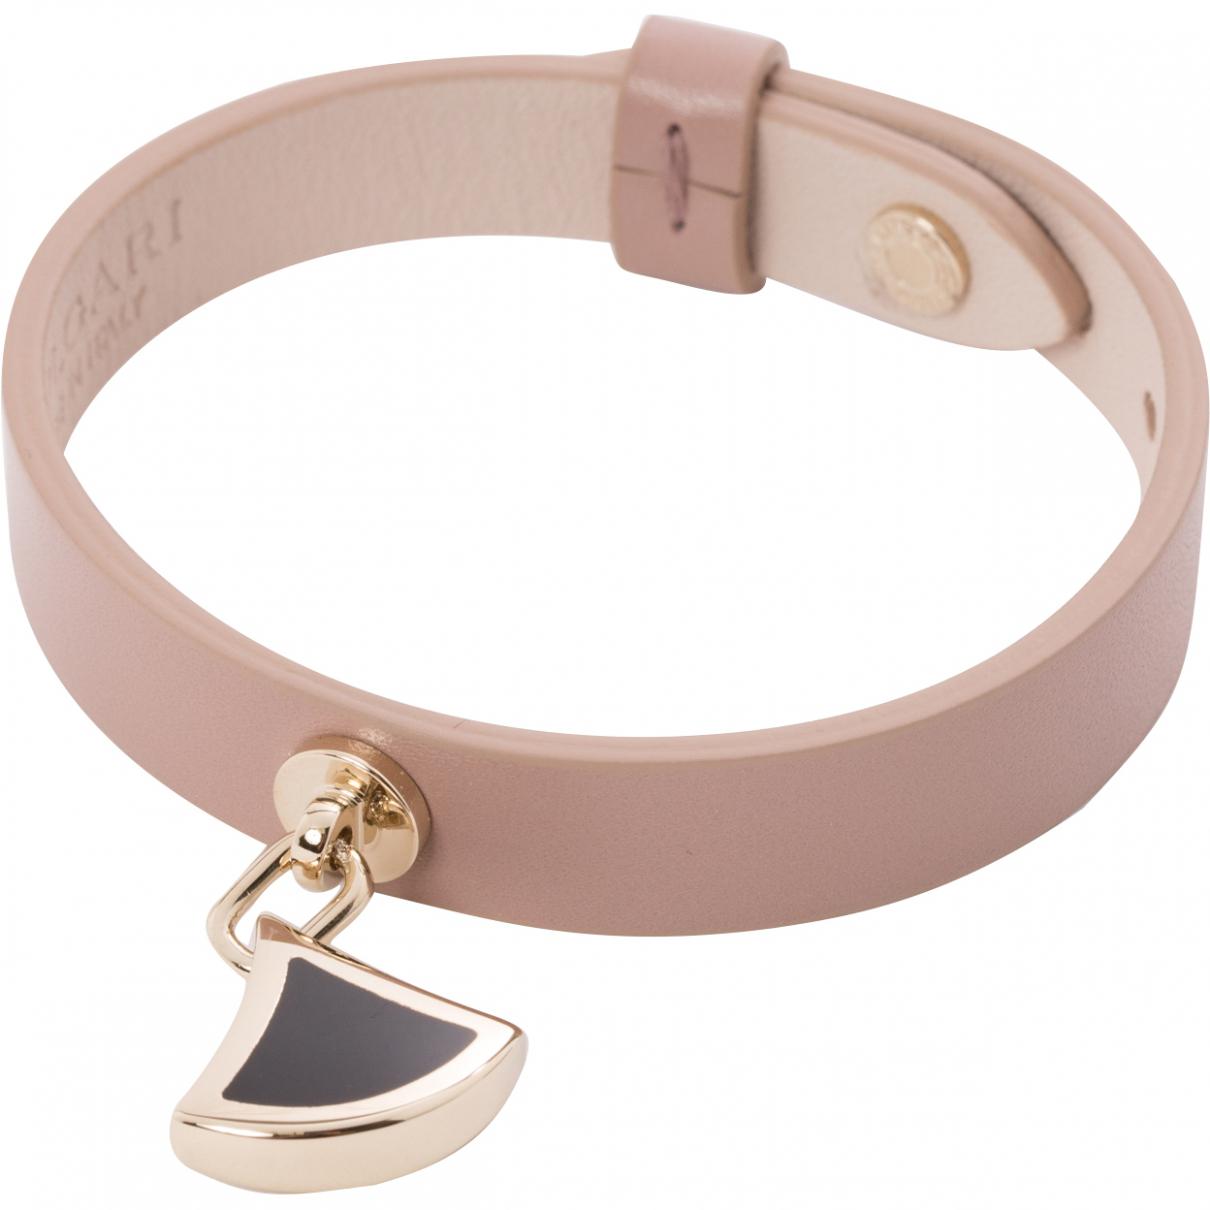 Dream Leather Bracelet in Pink 